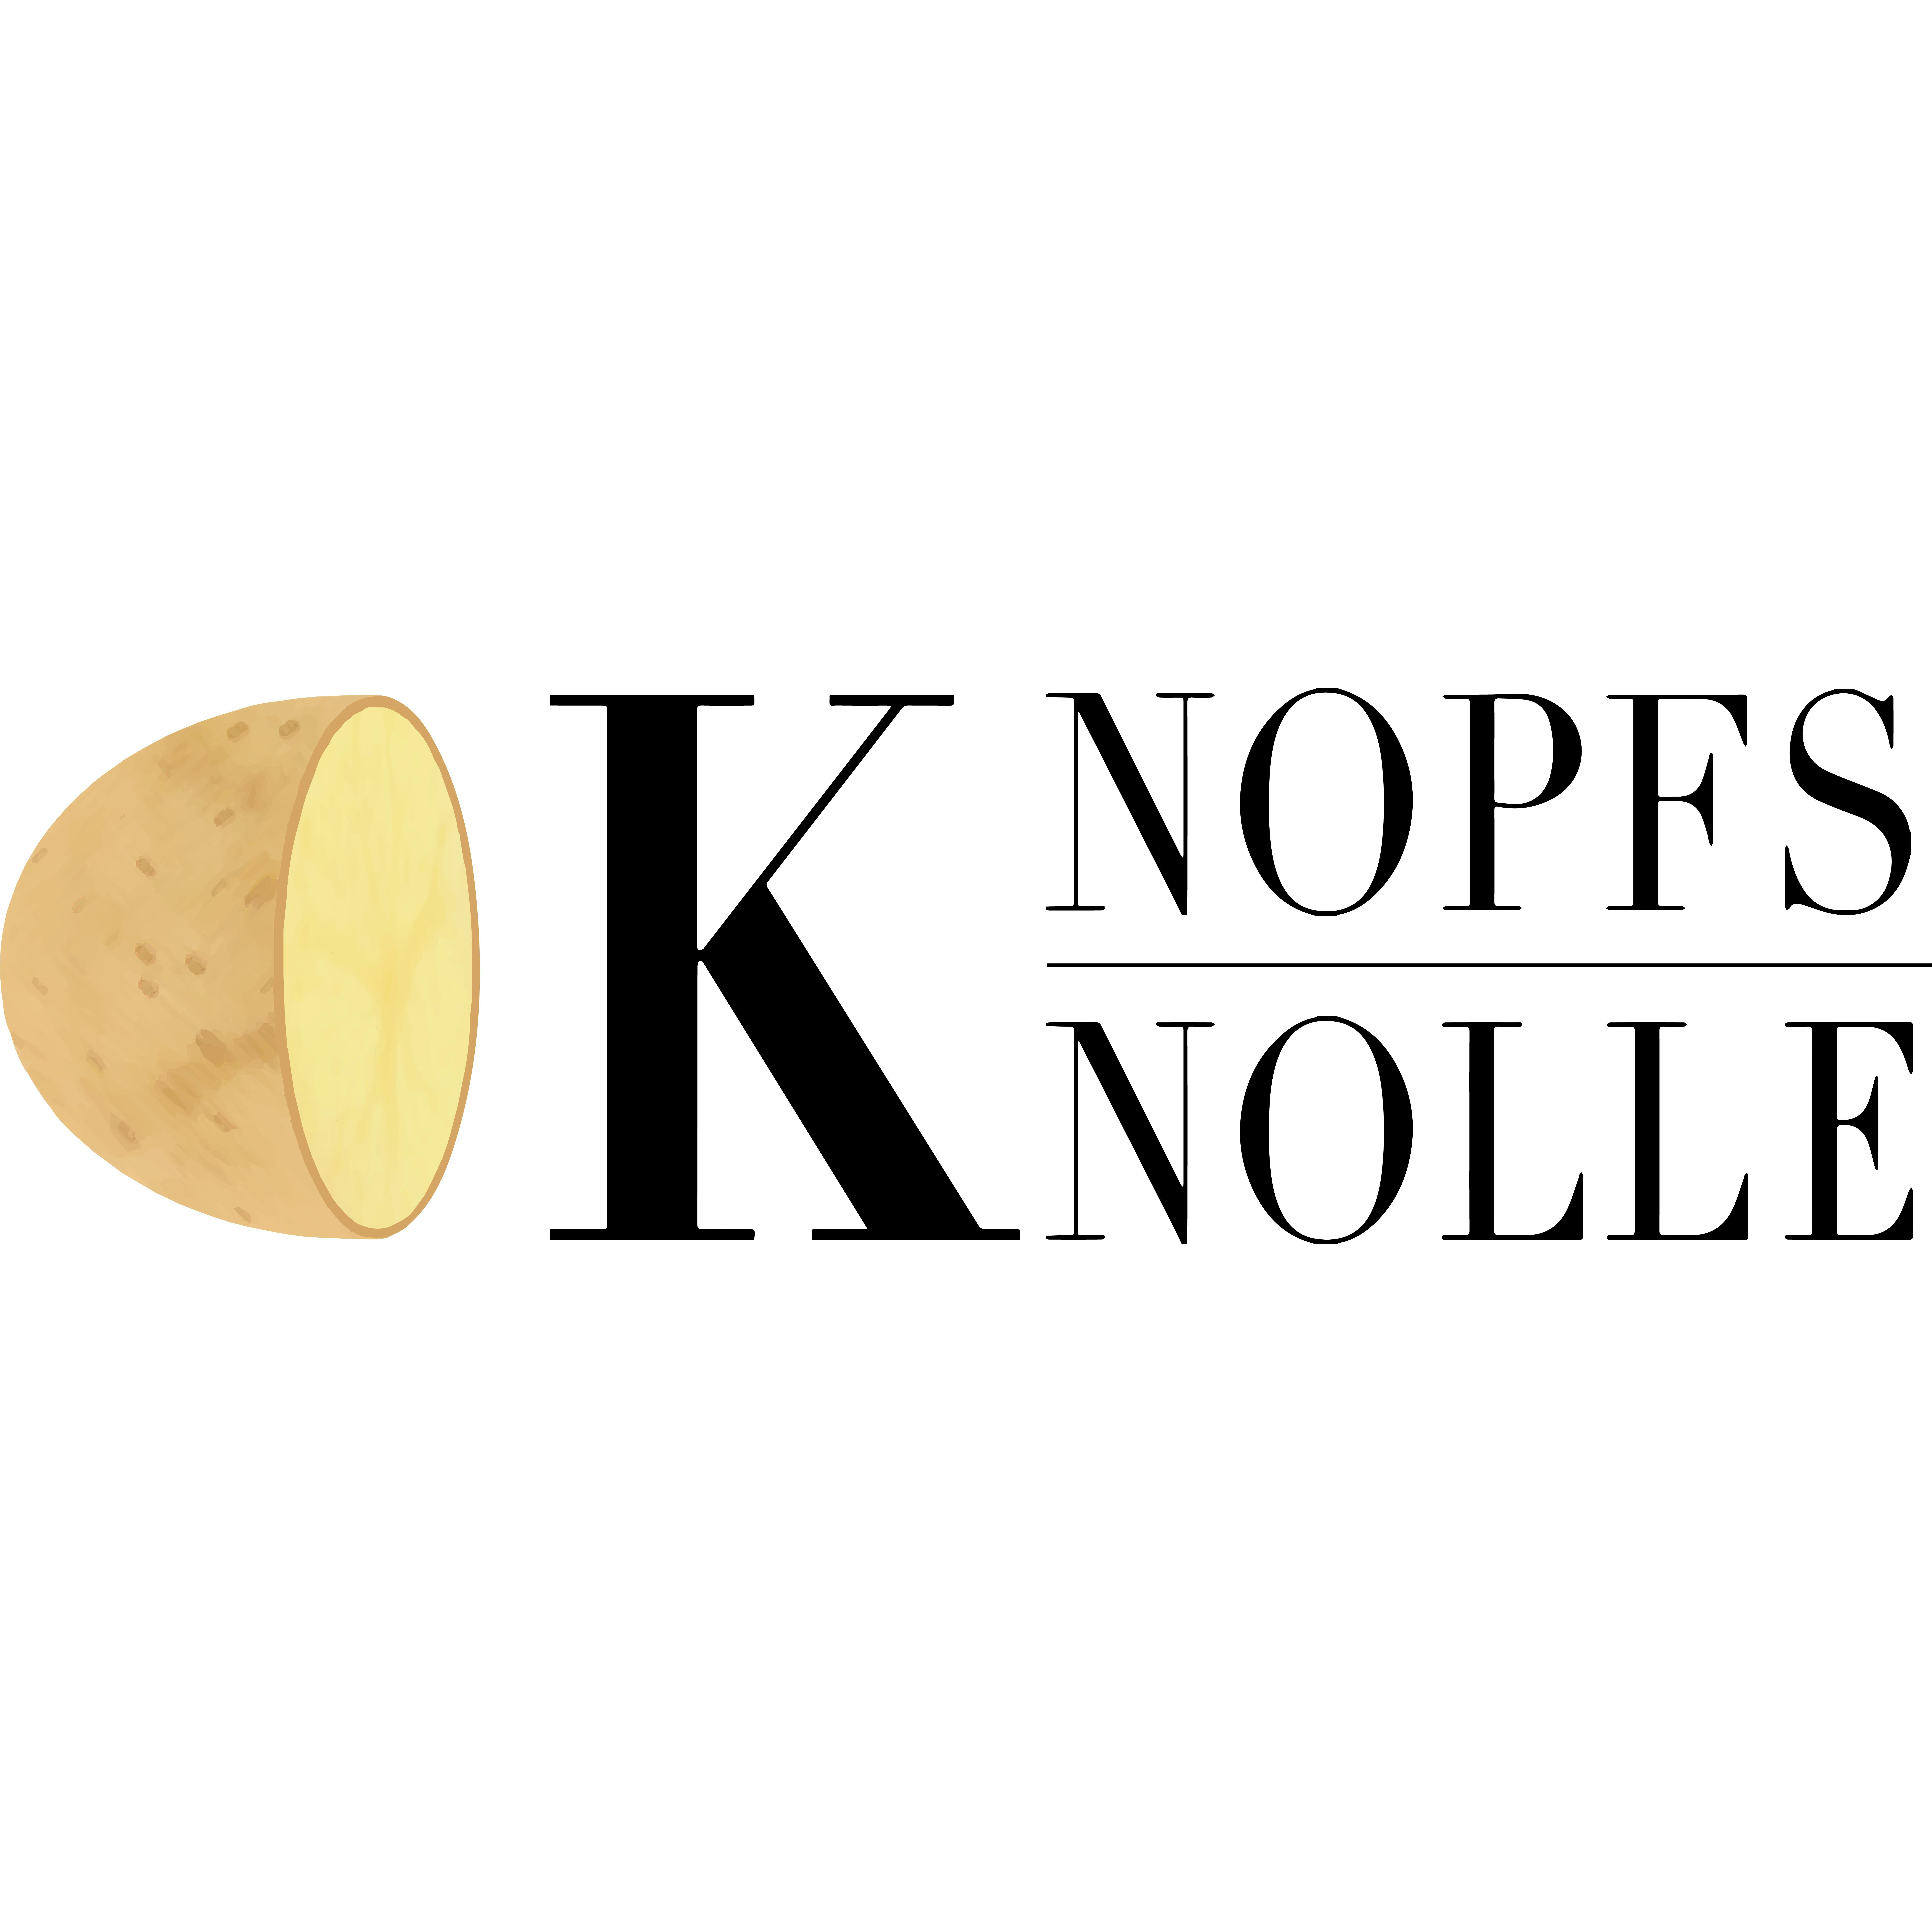 Logo Knopfs Knolle